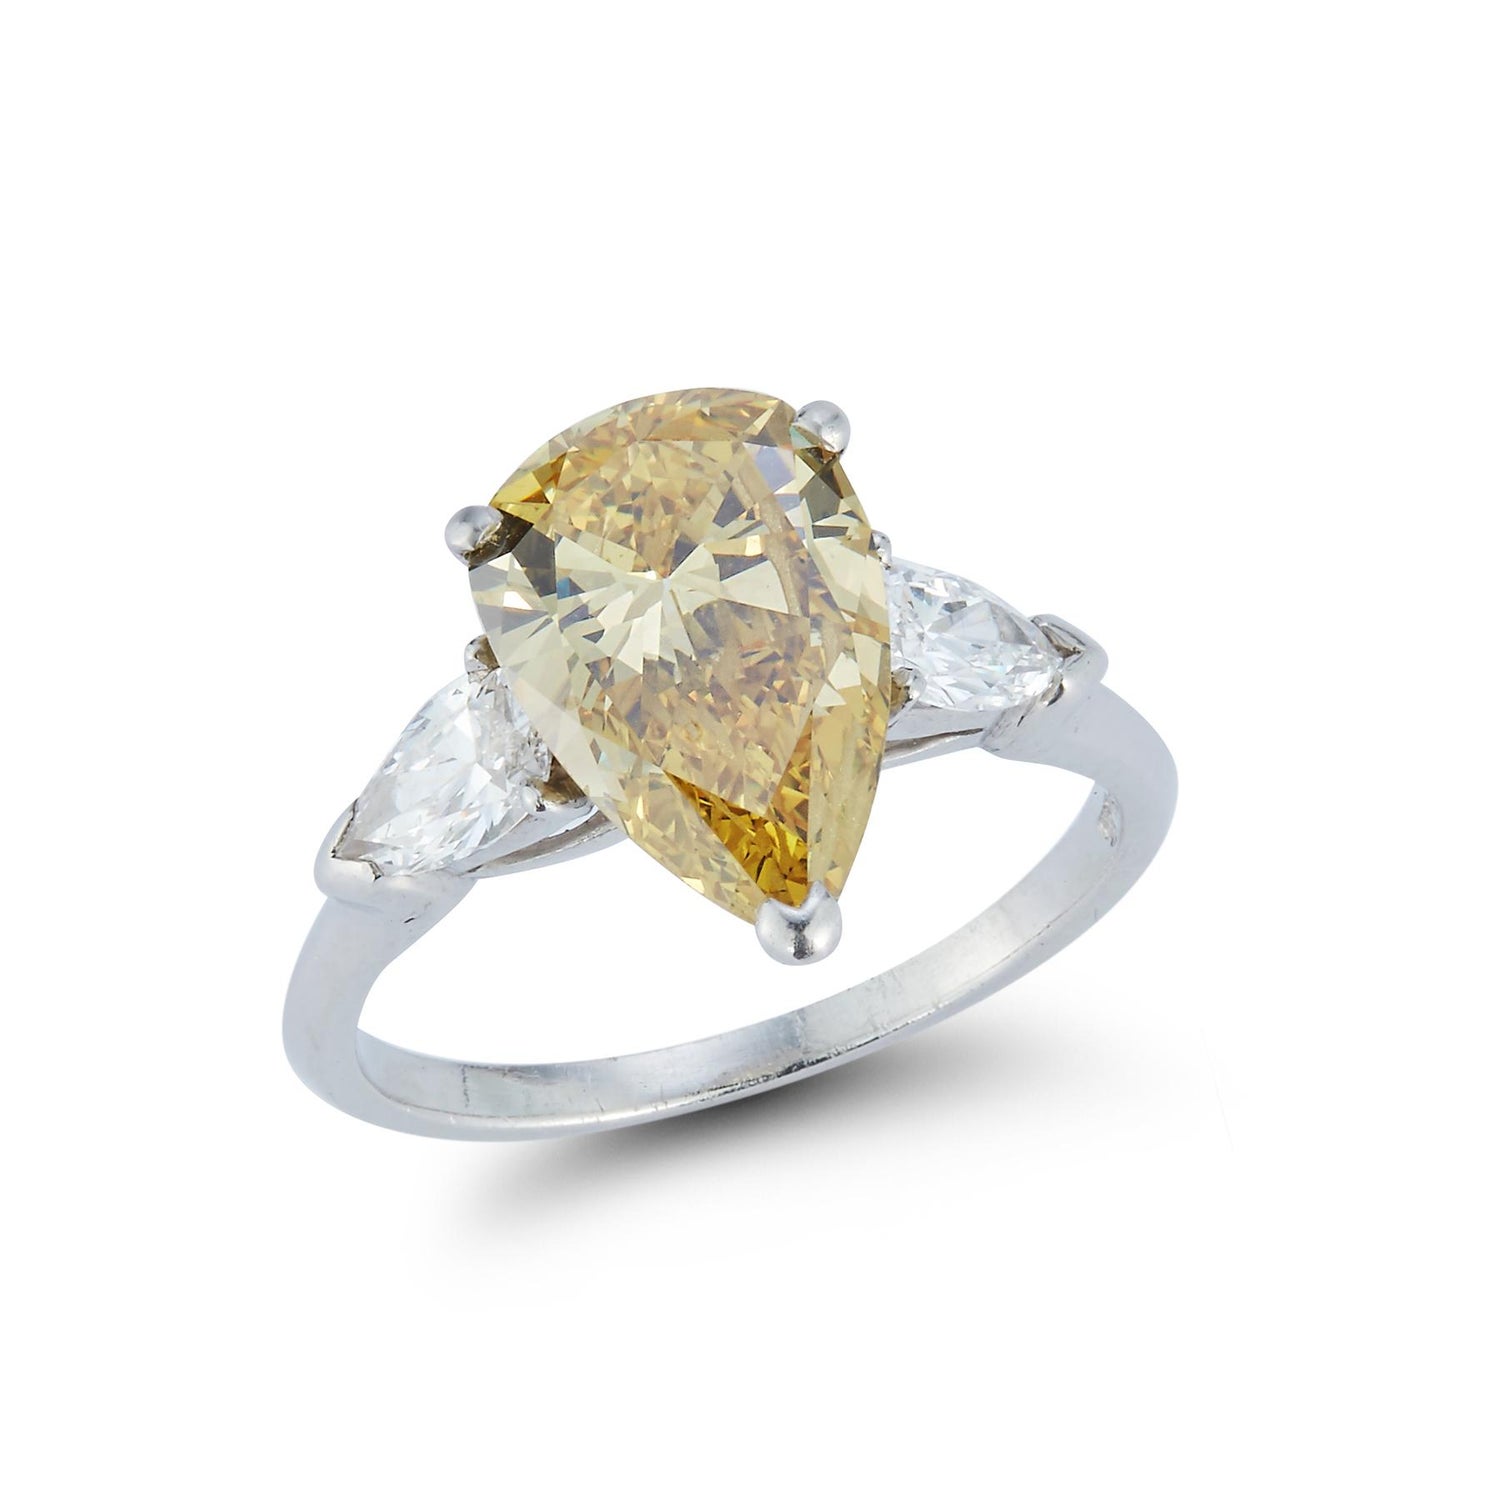 Diamond Engagement Rings - Diamond Eternity Rings - Unique Designs